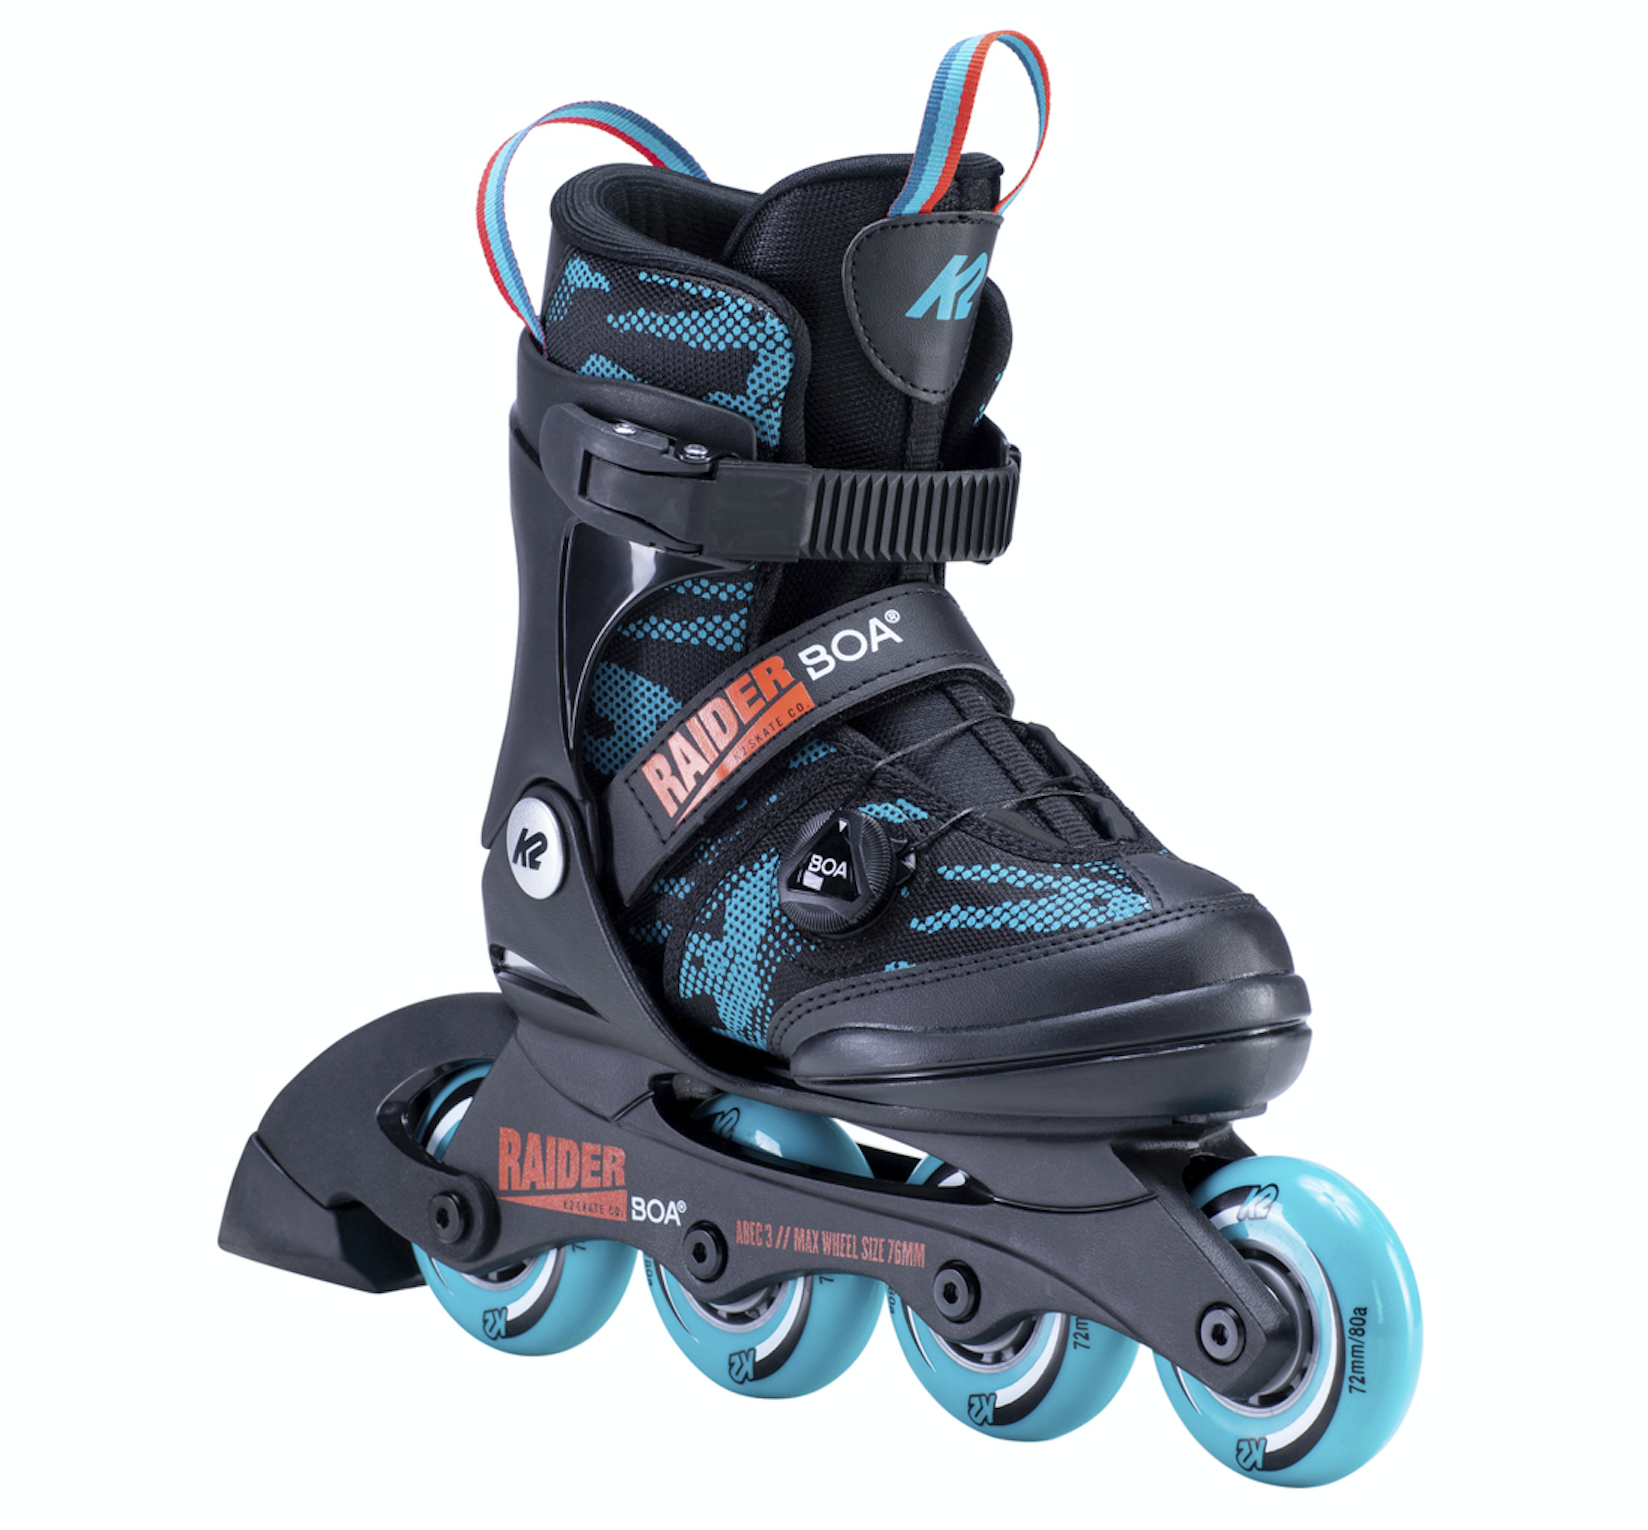 K2 Raider Jr BOA adjustable inline skates